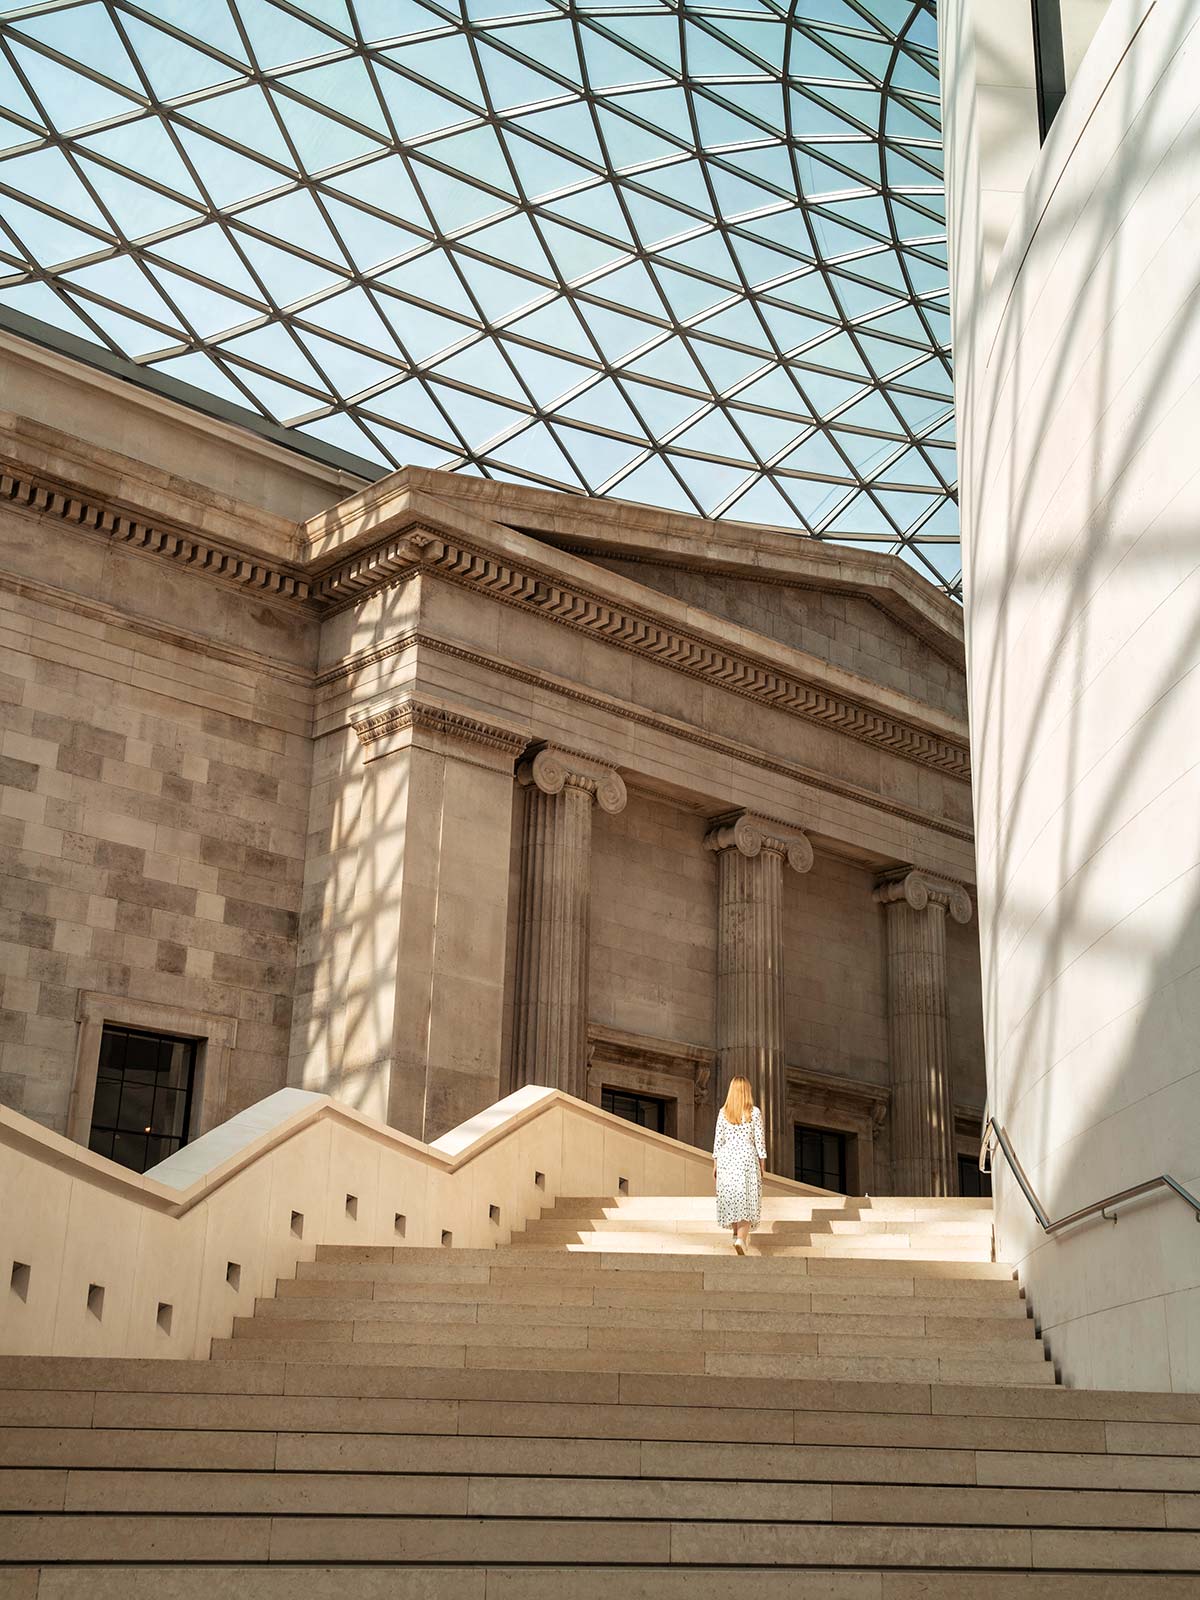 Escaliers du British Museum, Londres, Angleterre / British Museum Stairs, London, England, UK